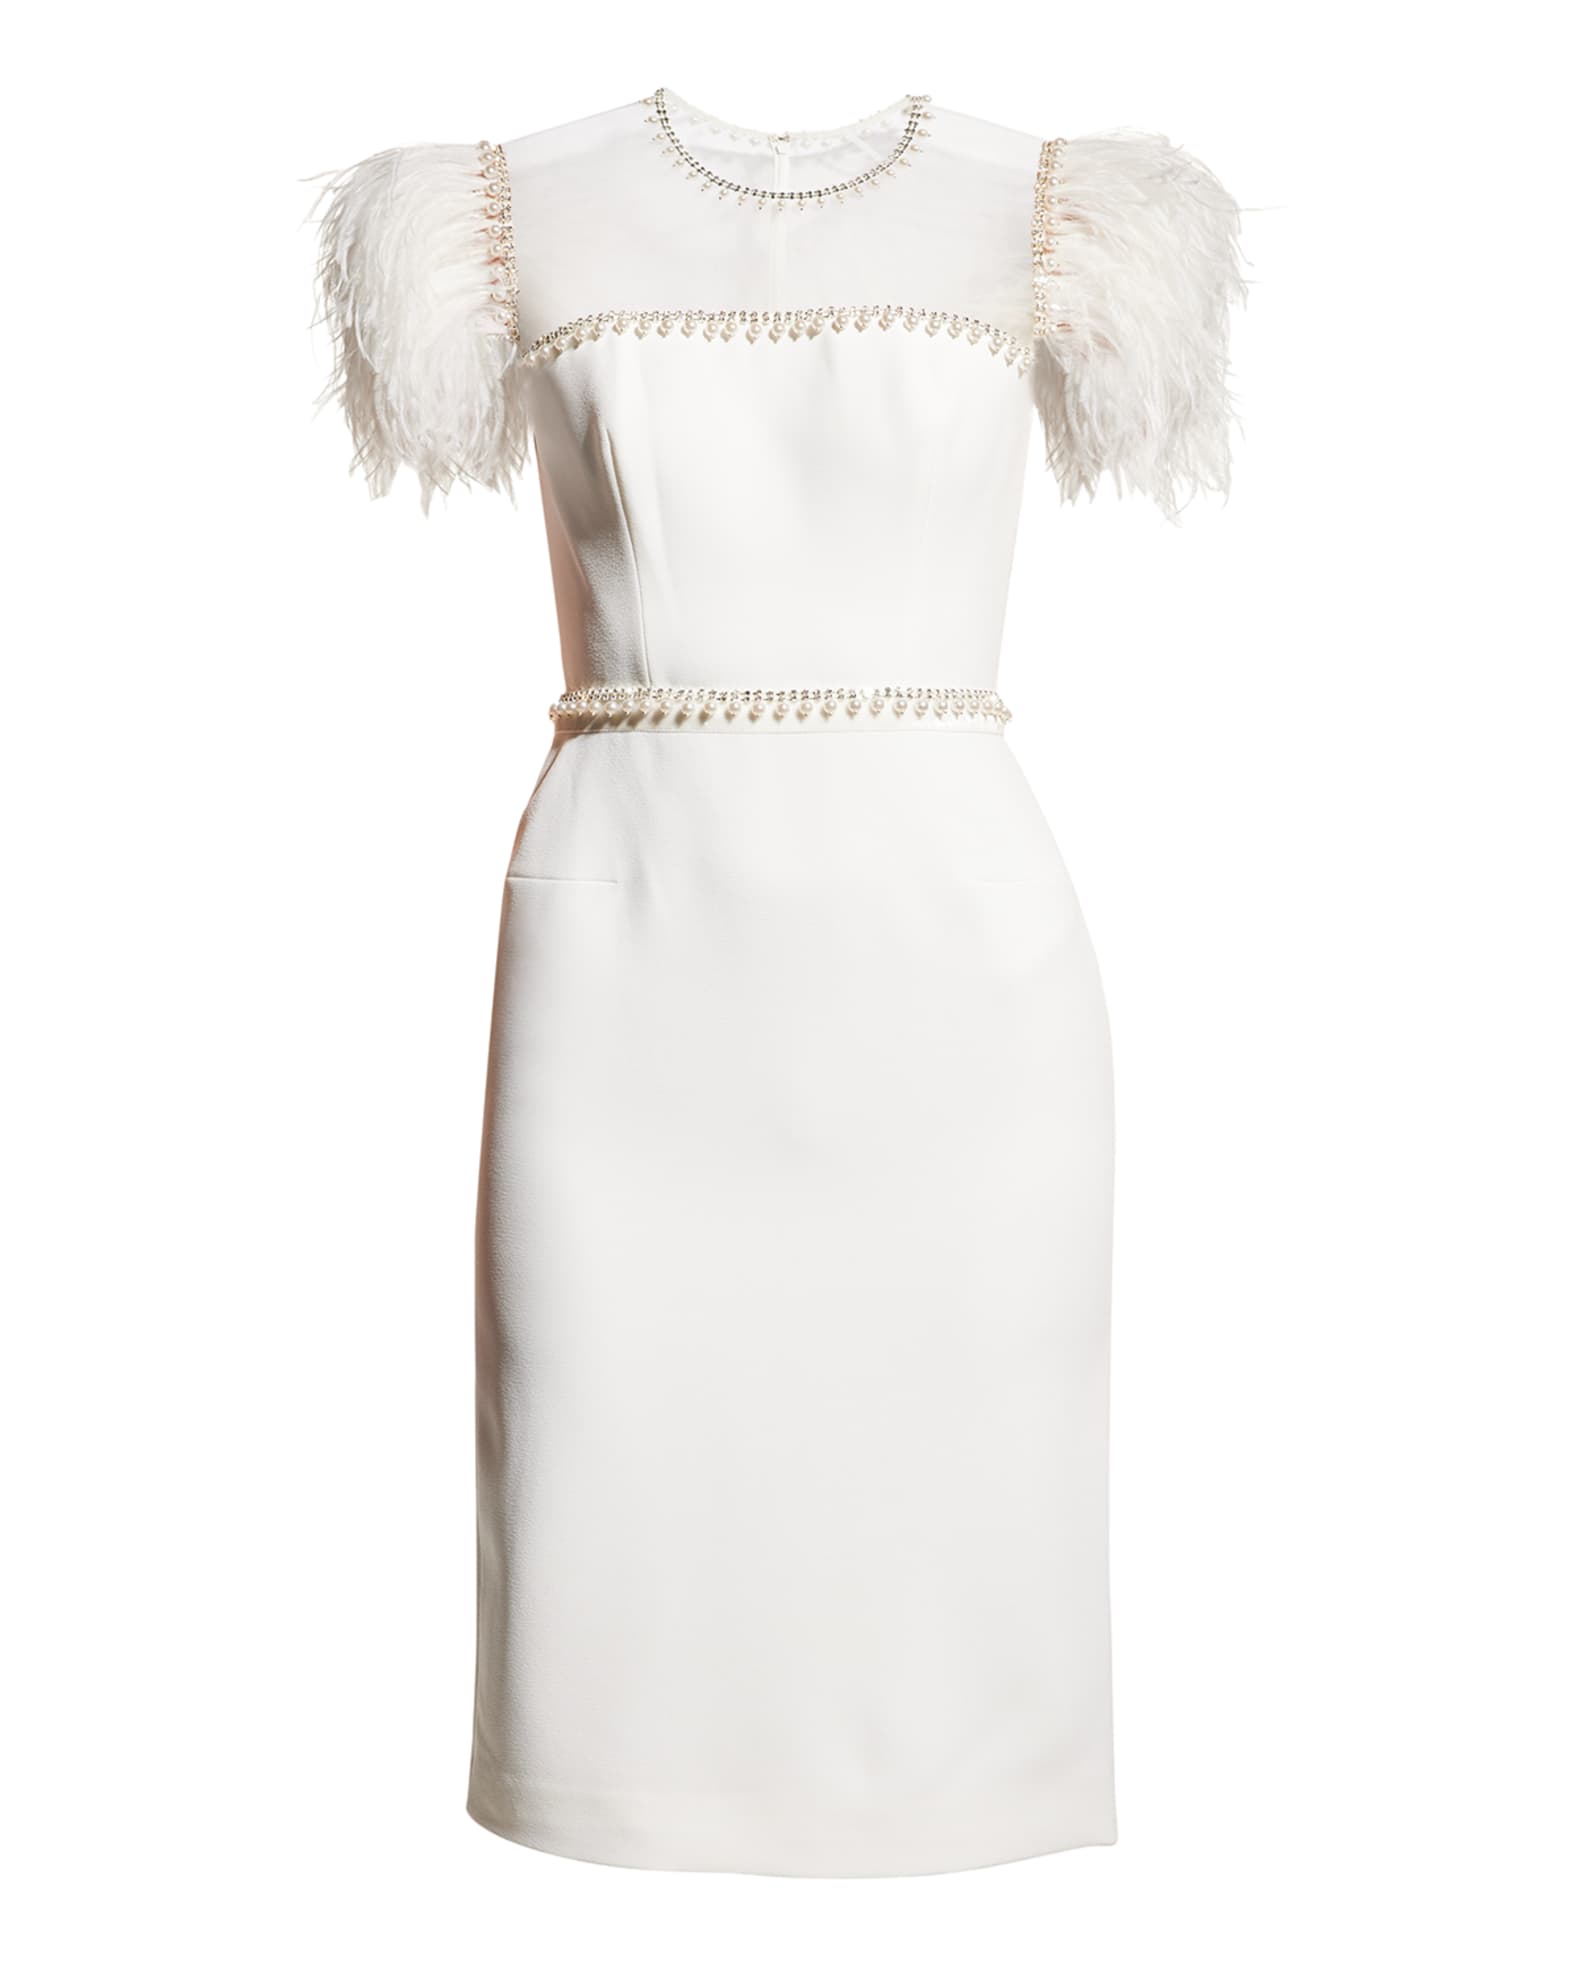 Jenny Packham Bridget Beaded Cap-Sleeve Illusion Dress | Neiman Marcus